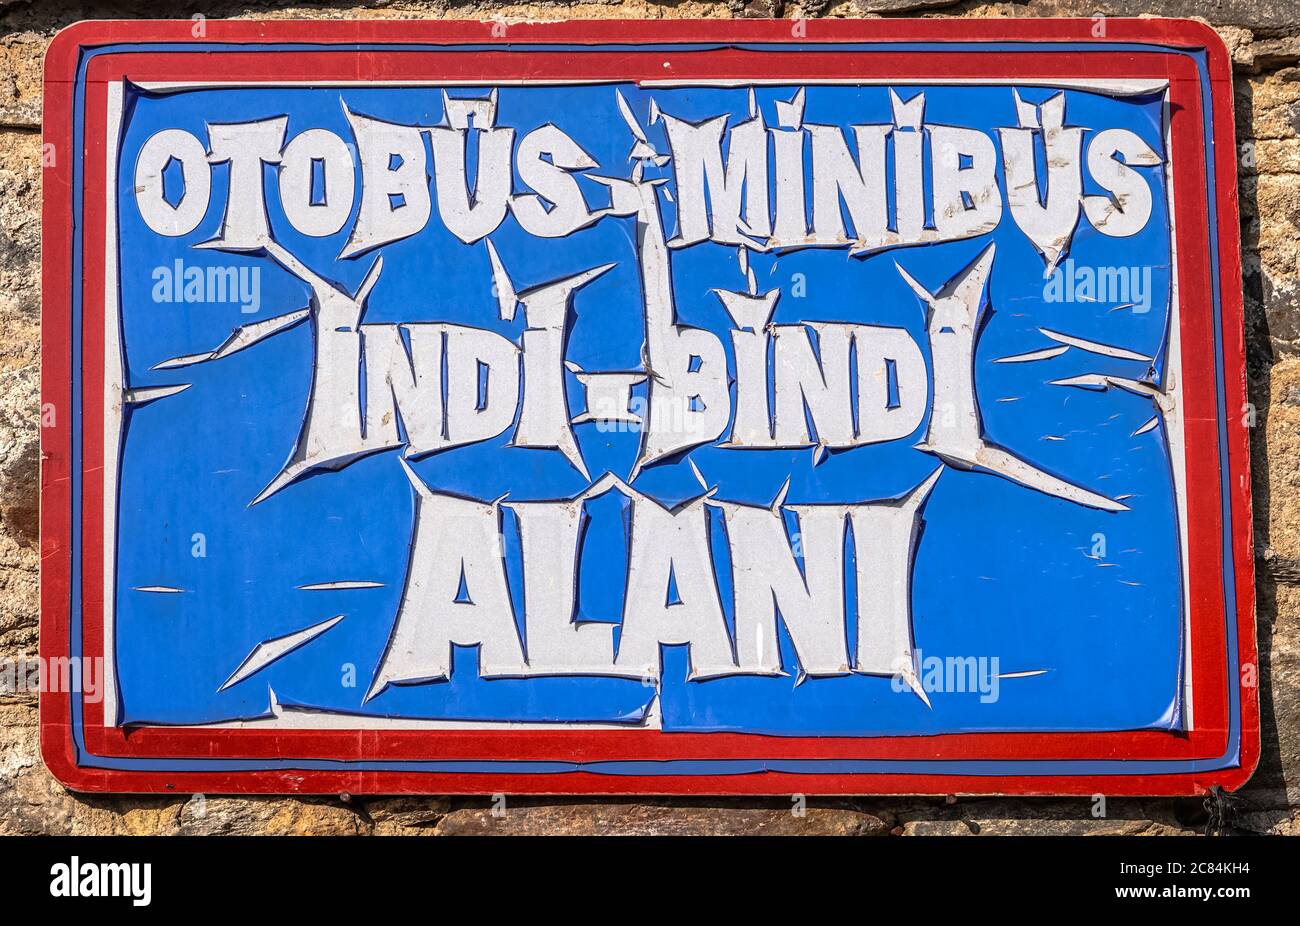 Bus and minibus station area sign in turkey. Translation:'otobüs minibüs indi bindi alanı Stock Photo